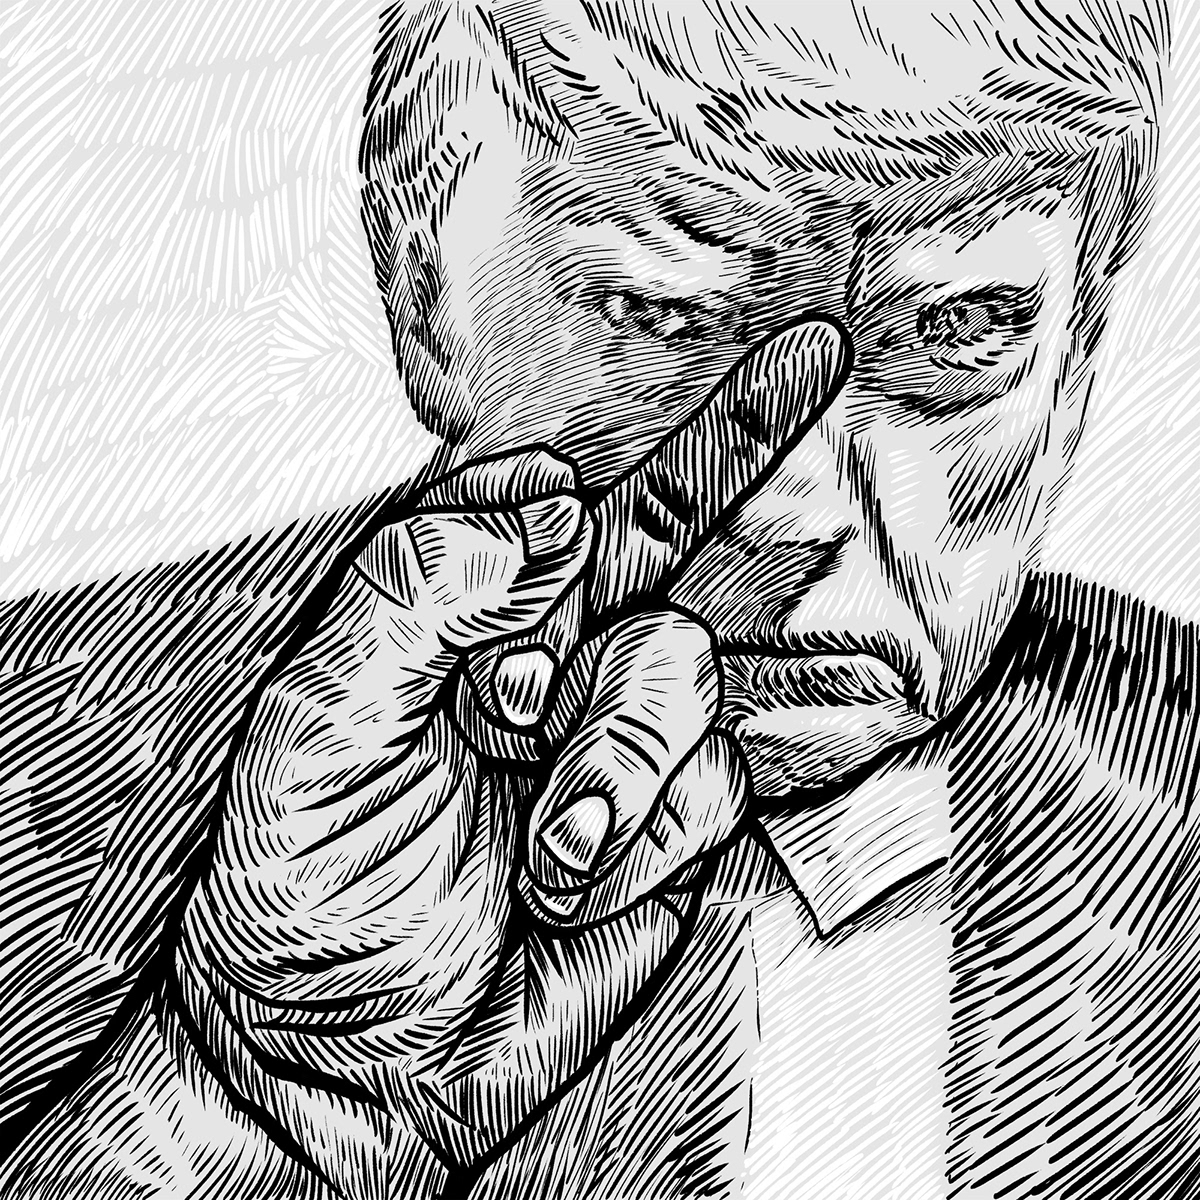 Donald Trump AntiTrump political social media graphic ukraine Digital Art  Anti Trampling War